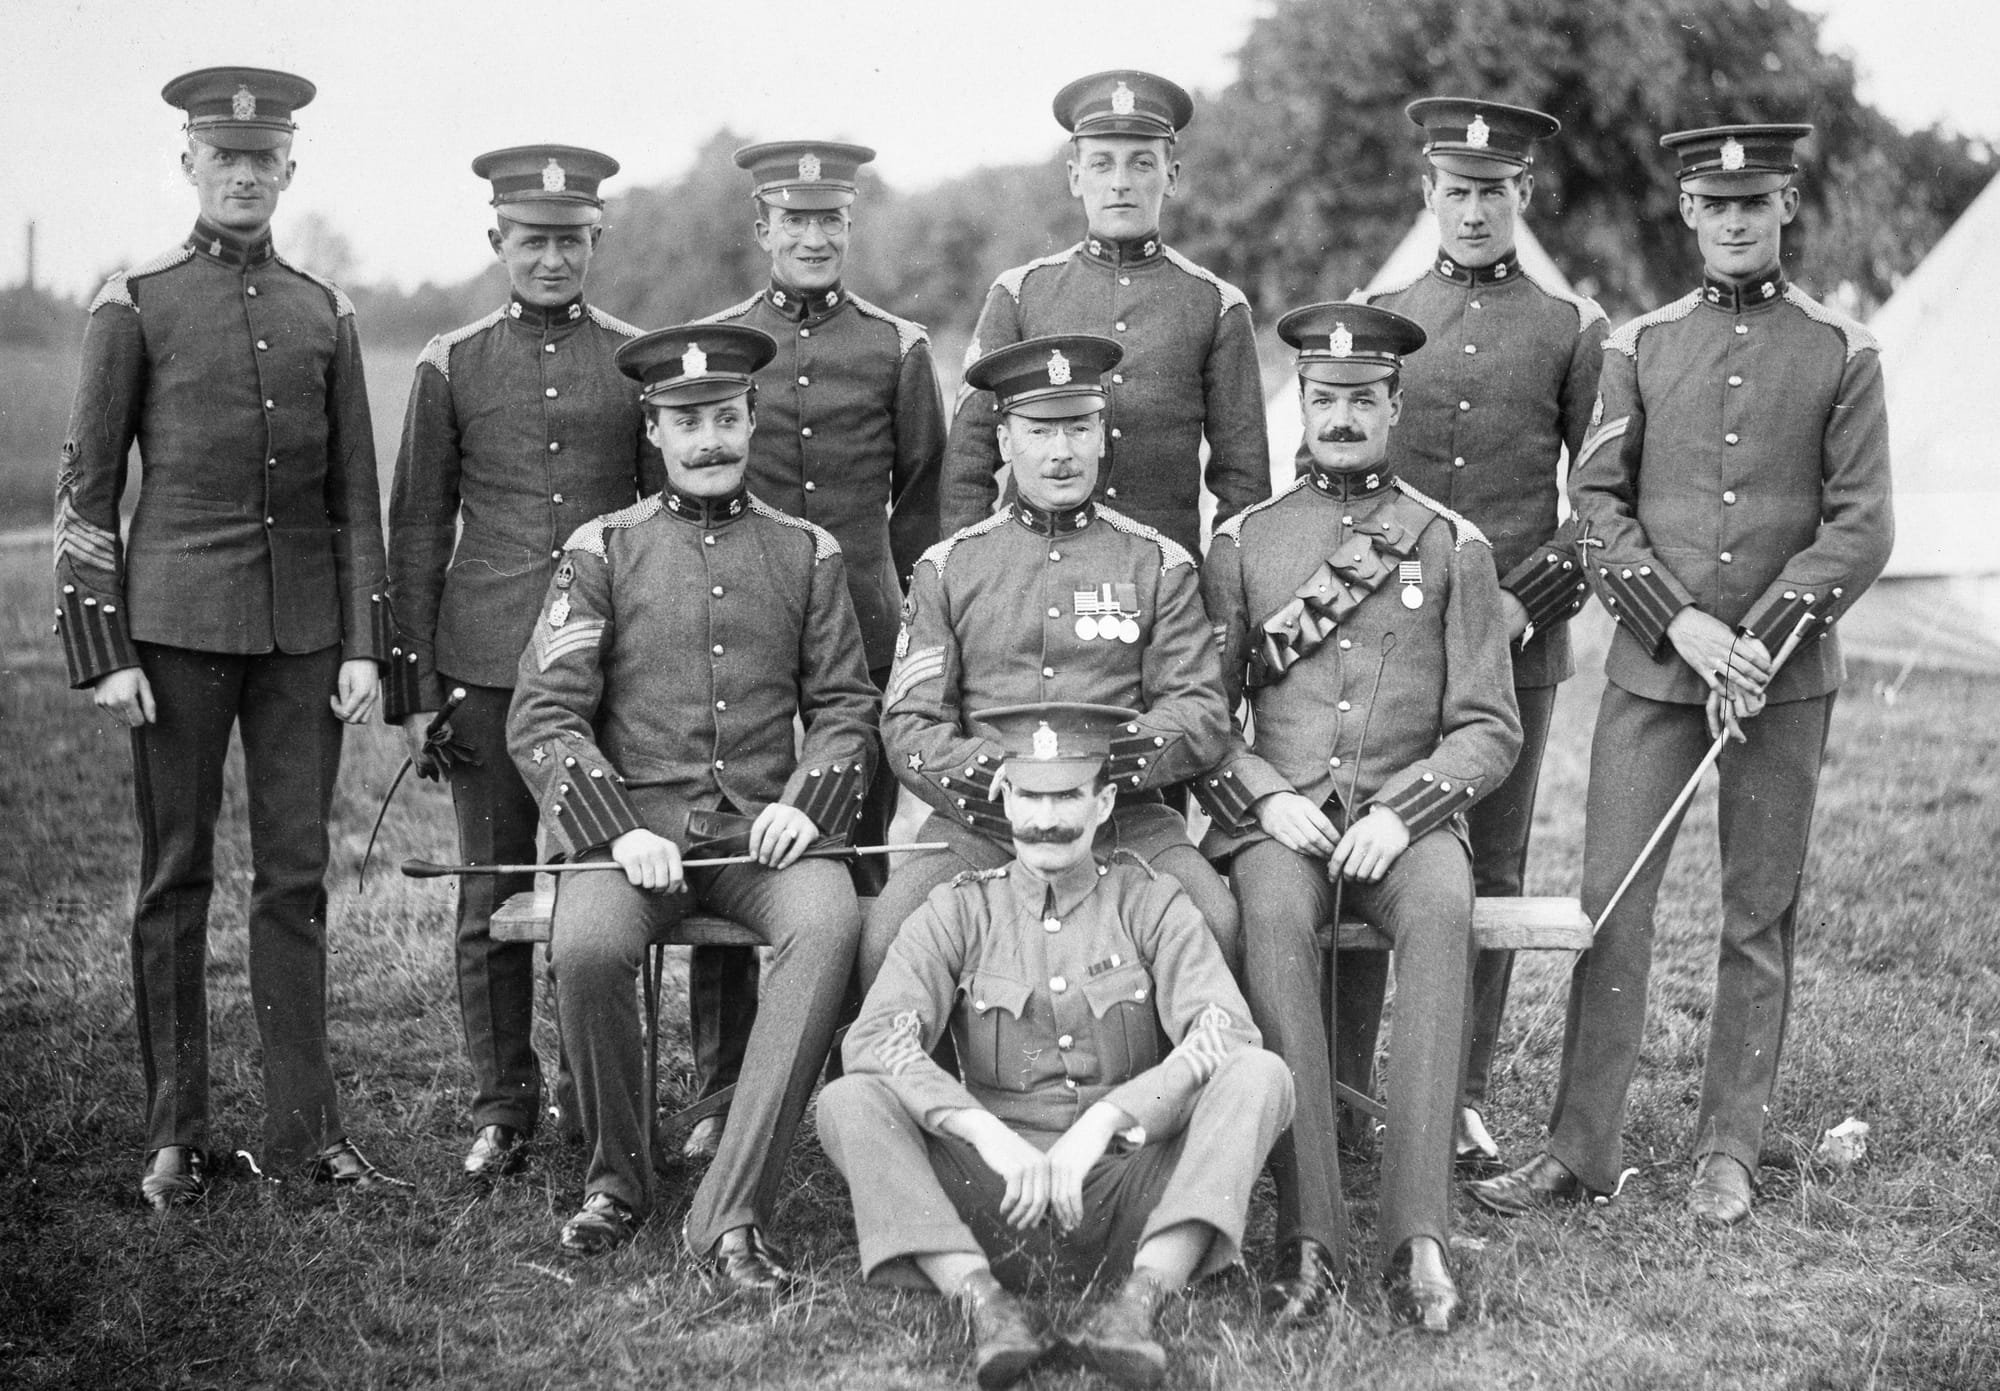 KEH NCOs in Undress uniform circa 1911. Courtesy David Knight.